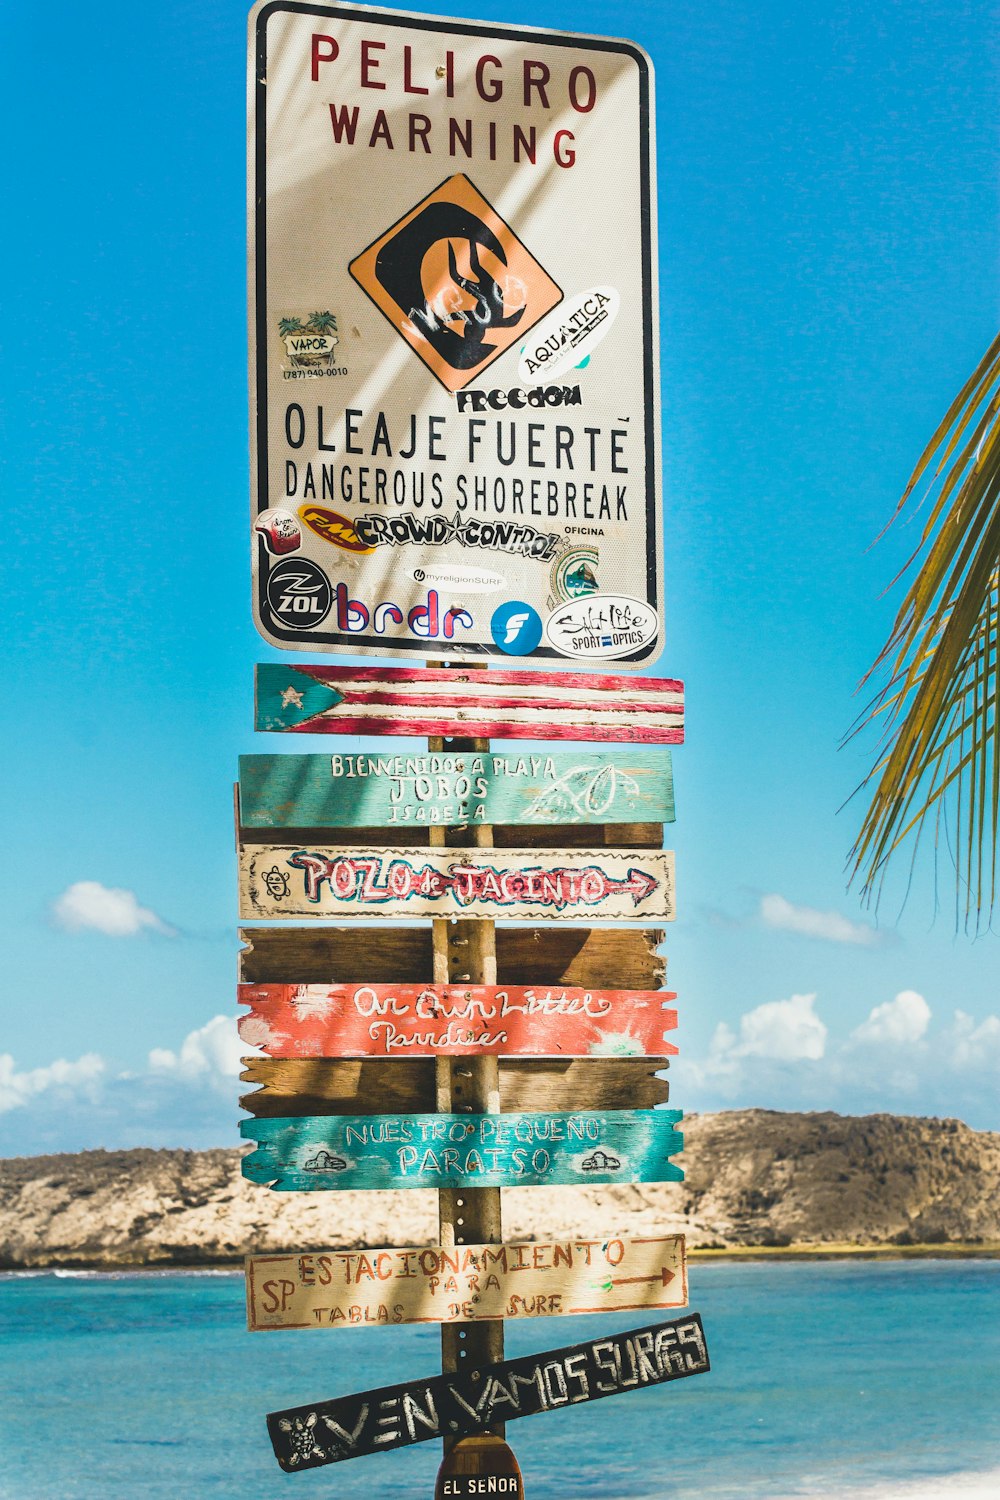 Peligro Warning signage on beach